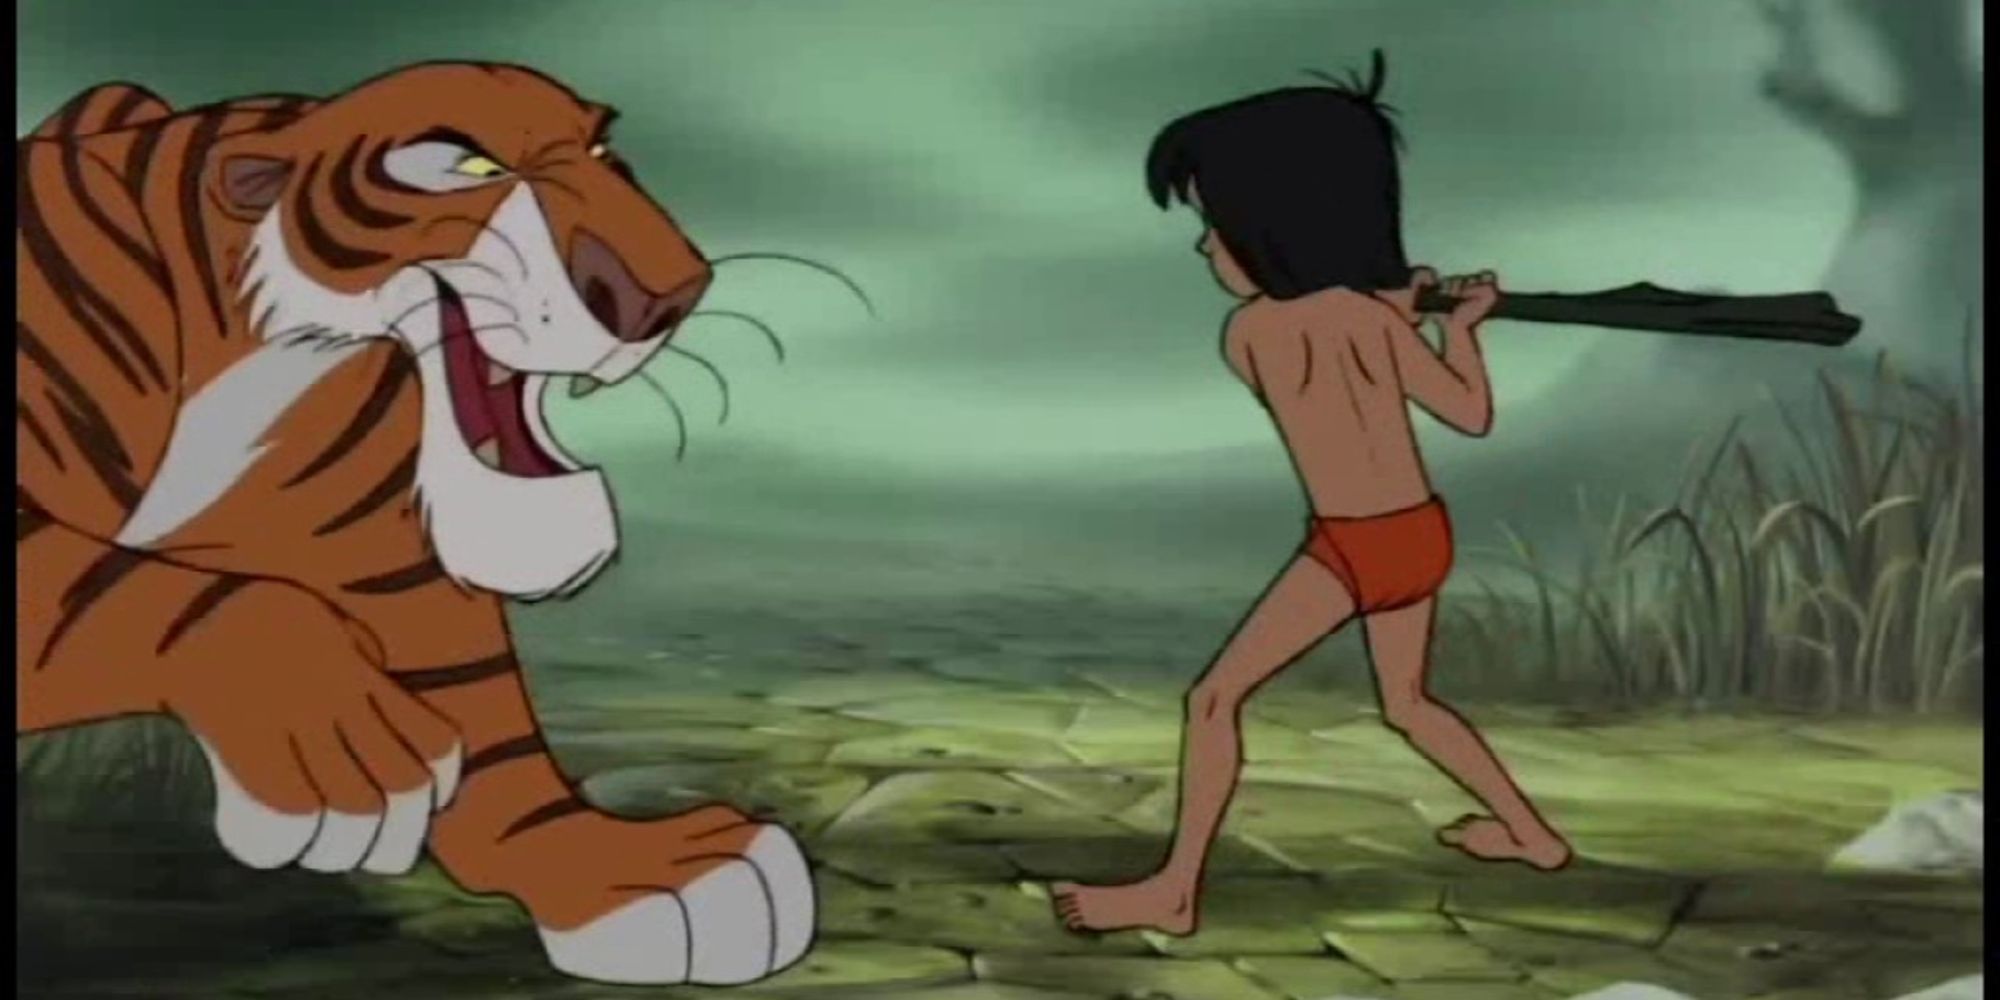 Mowgli tries to fight Shere Khan in The Jungle Book